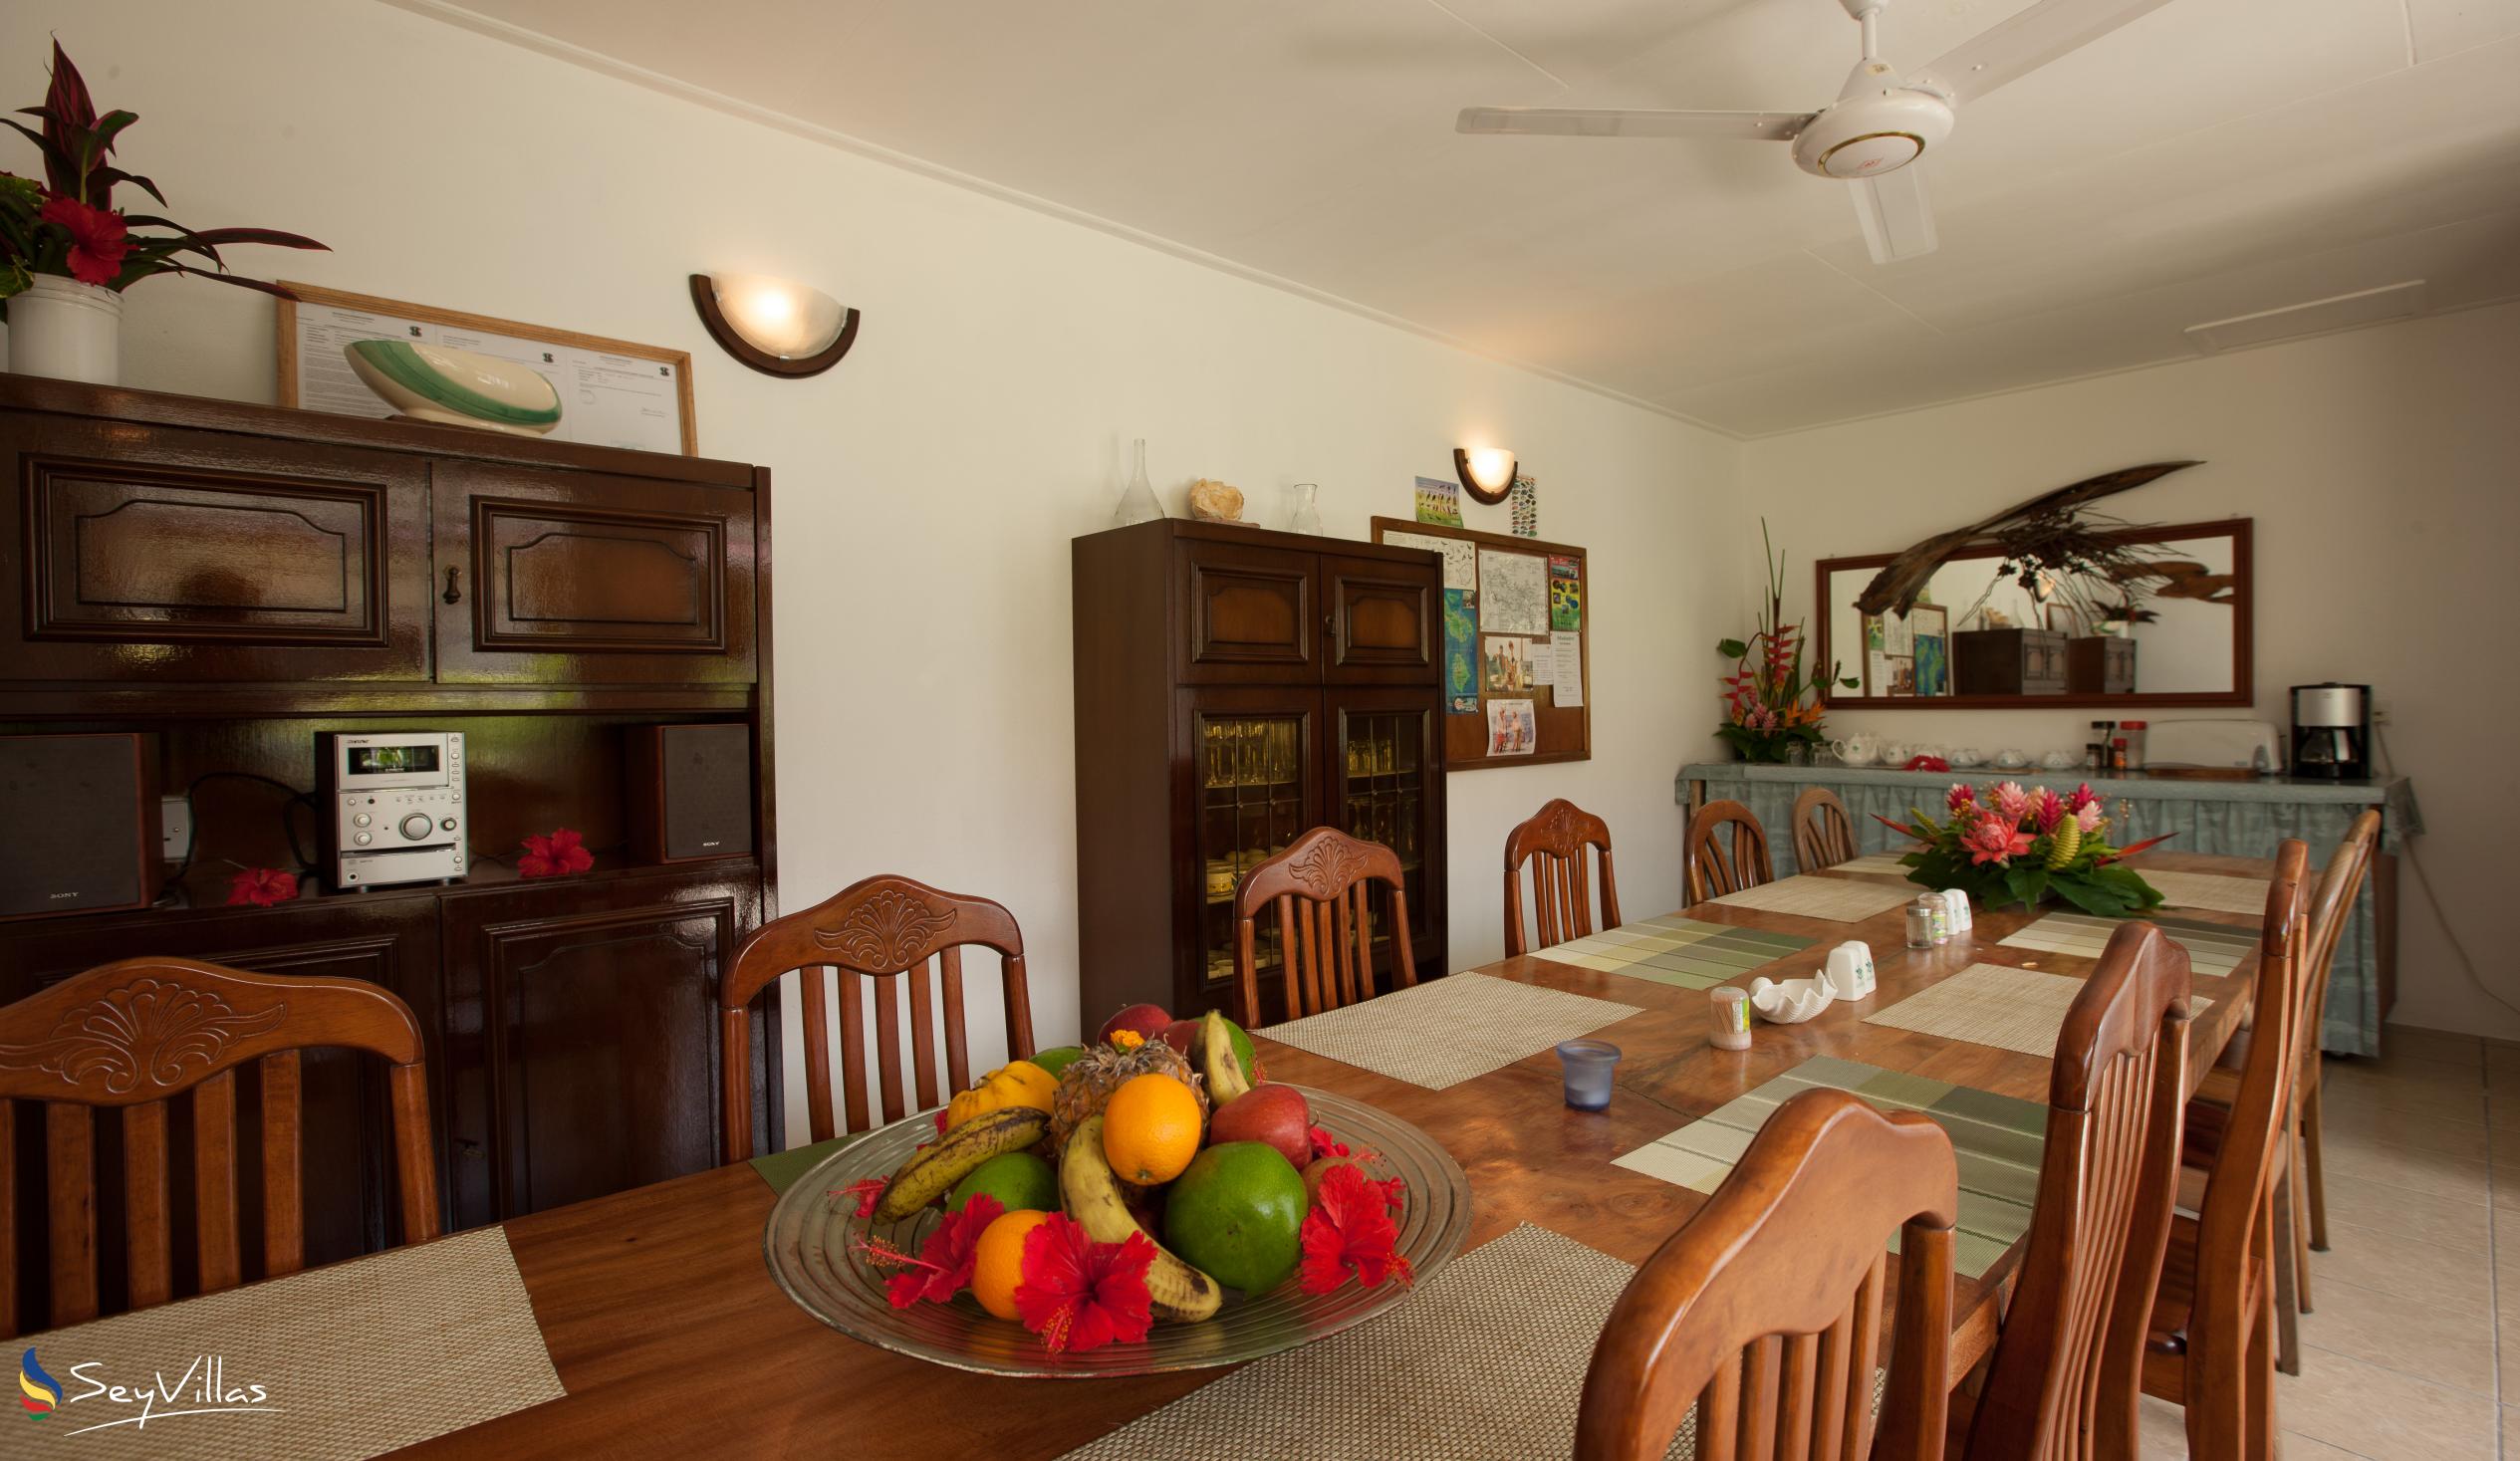 Foto 11: Le Relax St. Joseph Guest House - Interno - Praslin (Seychelles)